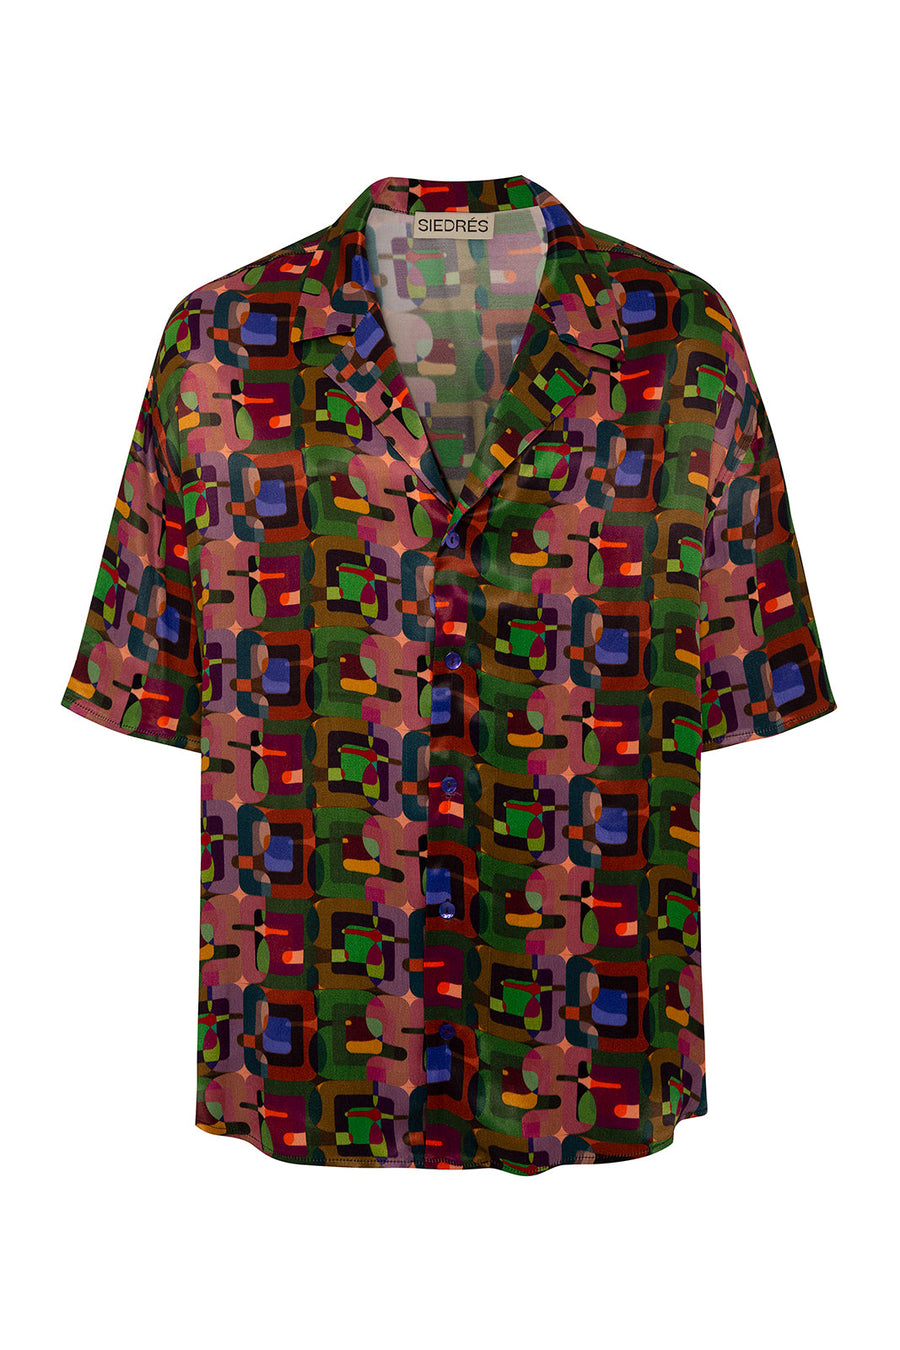 COLTON - Resort collar short sleeve printed shirt